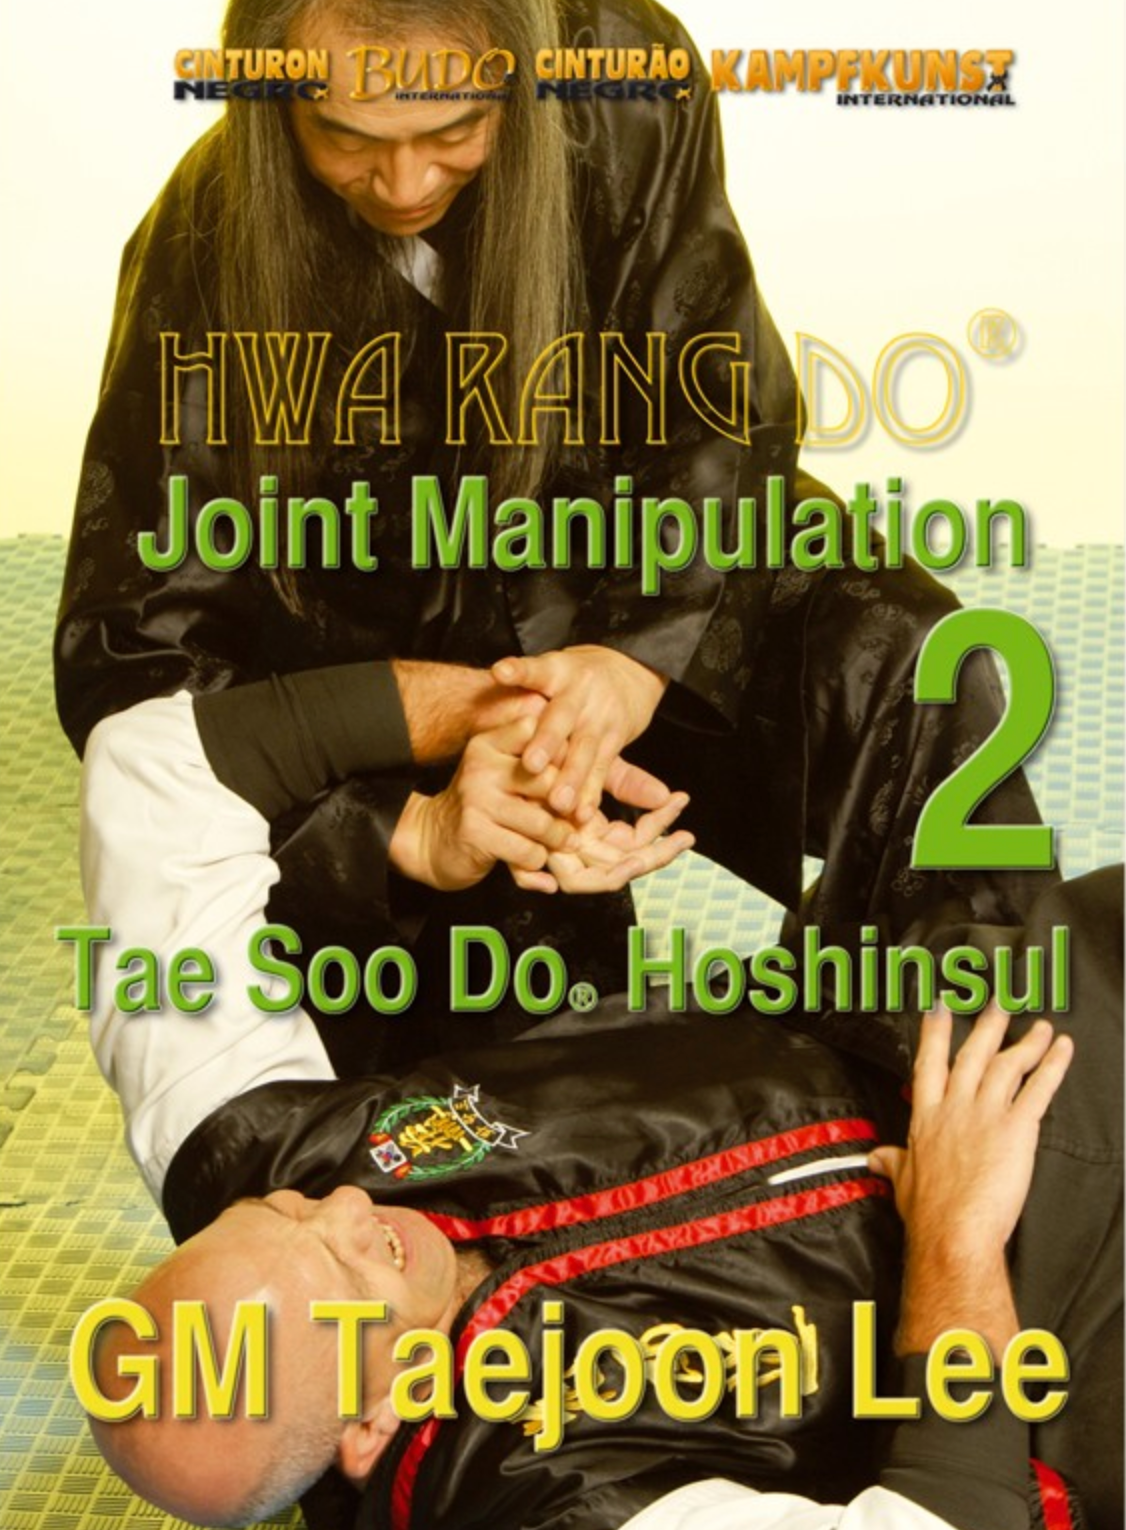 Hwa Rang Do Hoshinsul Vol 2 Joint Manipulation DVD by Taejoon Lee - Budovideos Inc